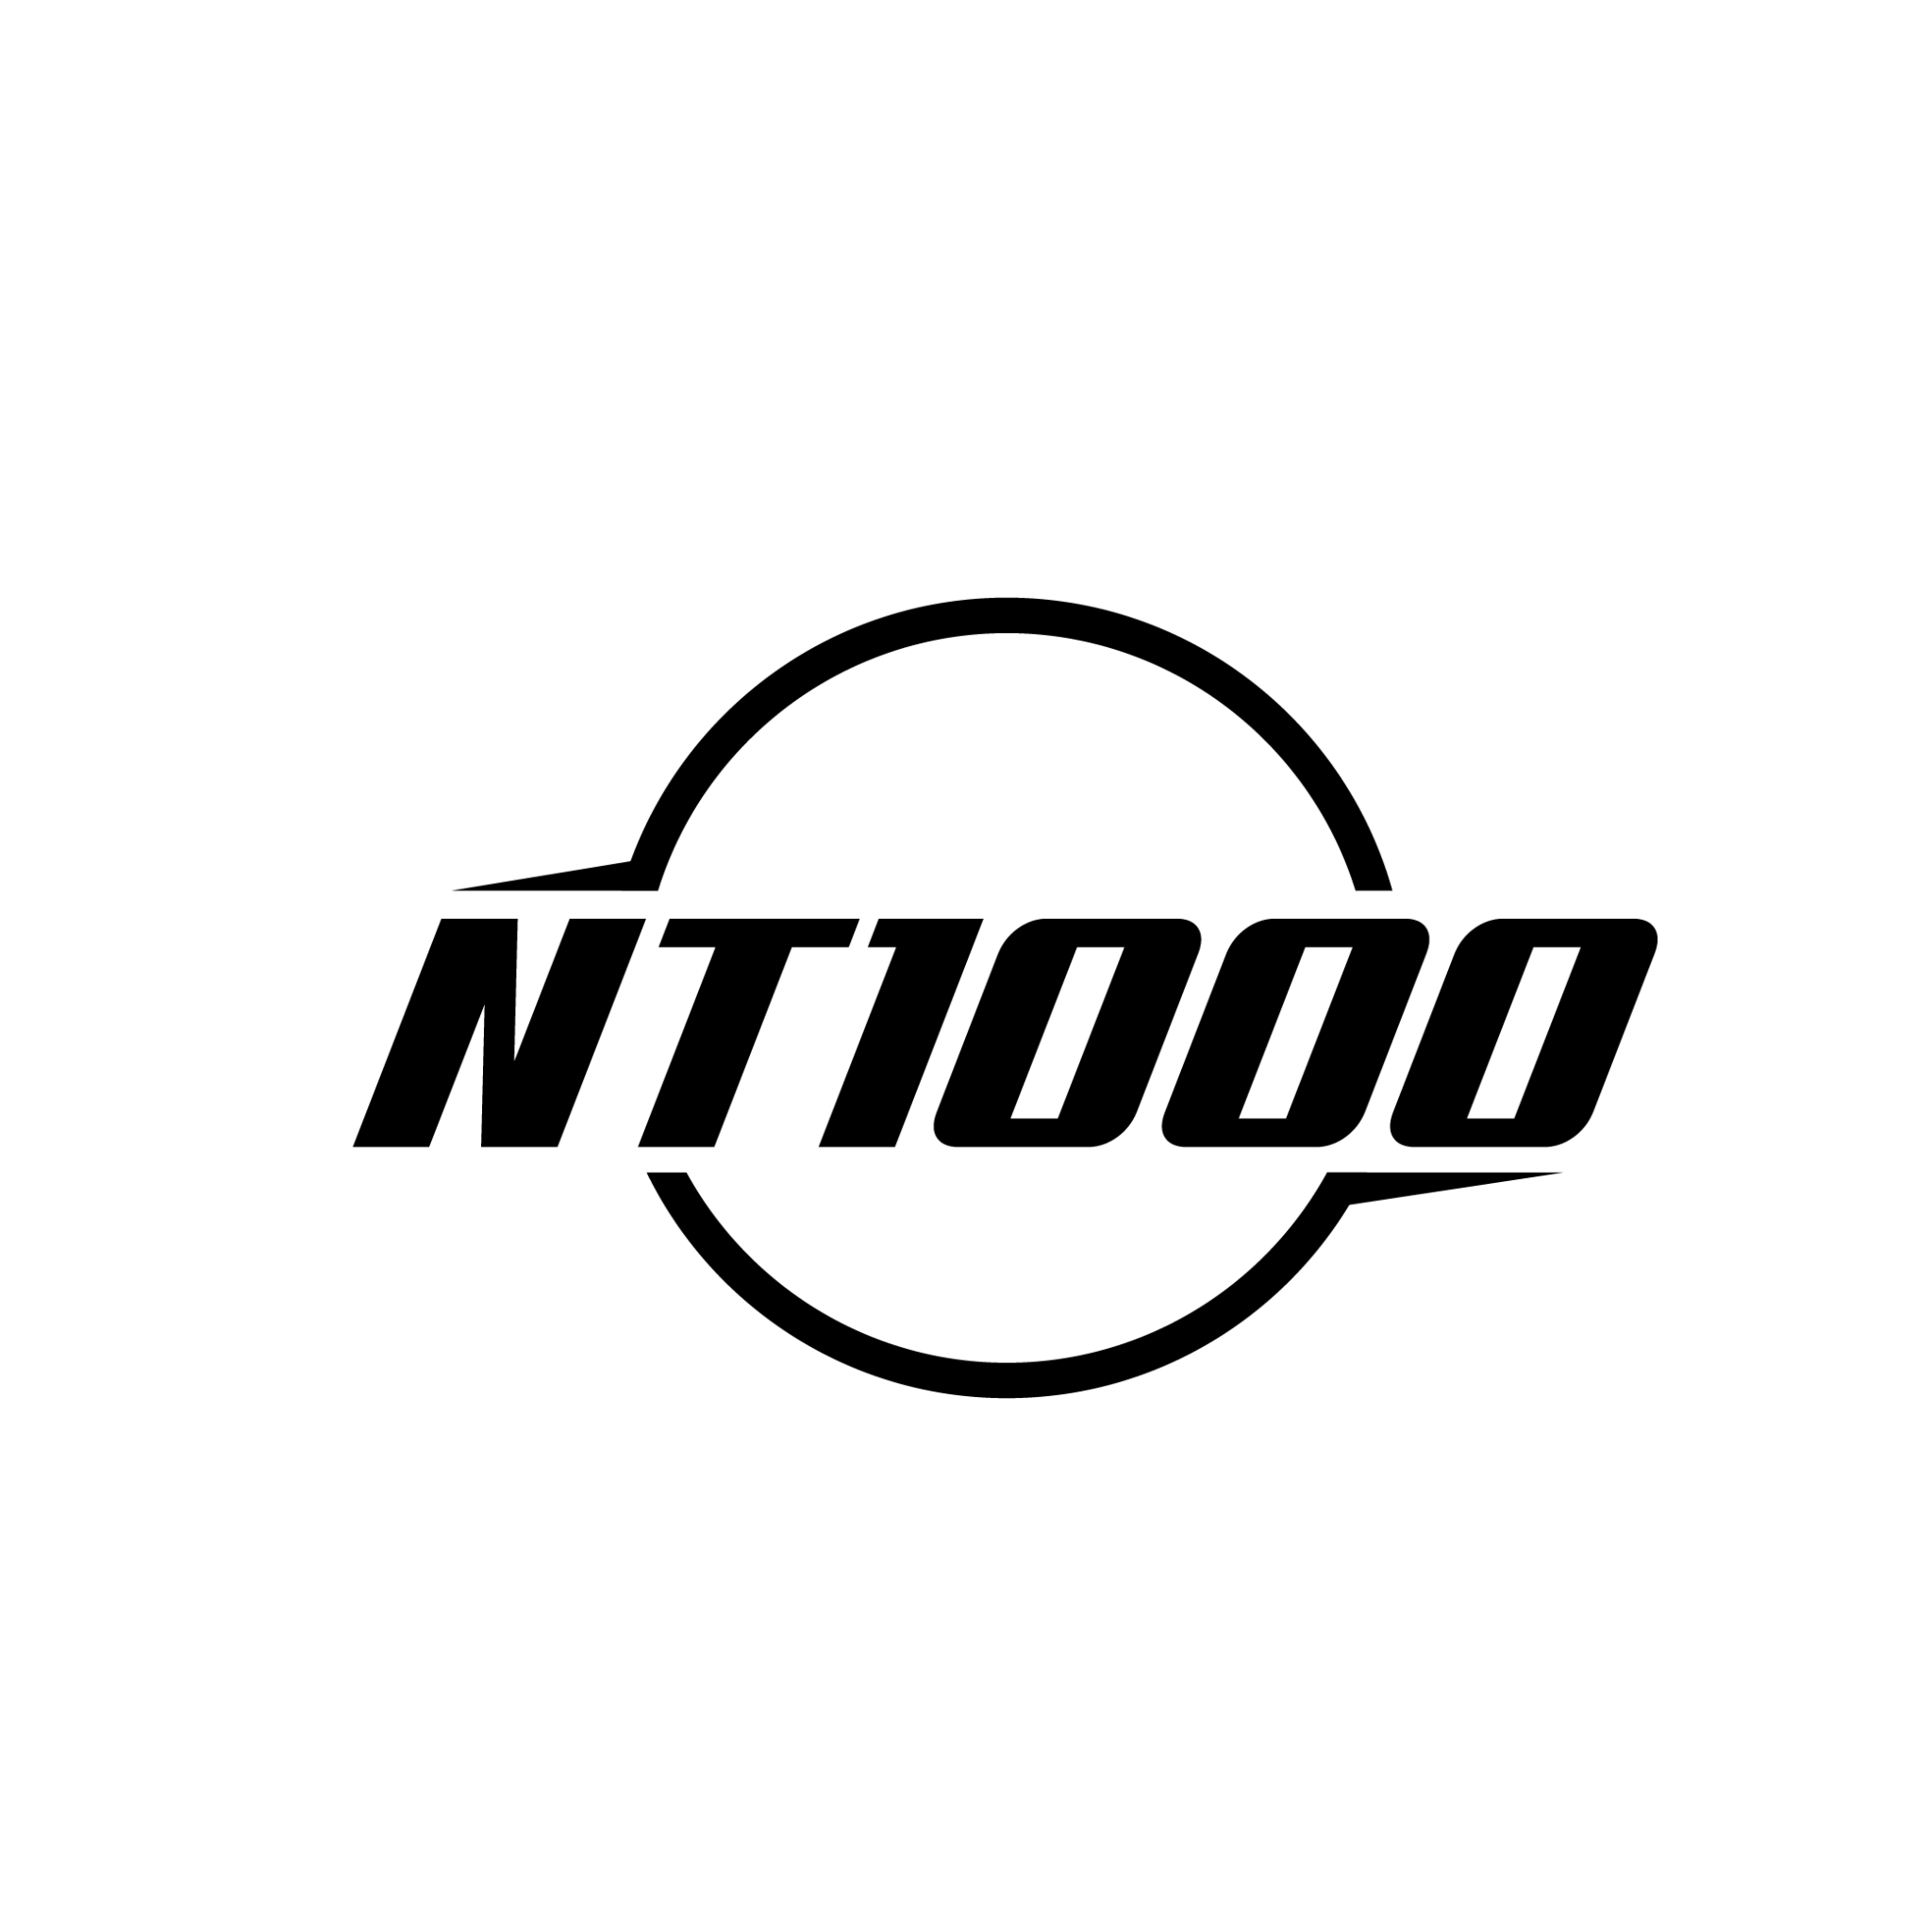 NT1000 Logo